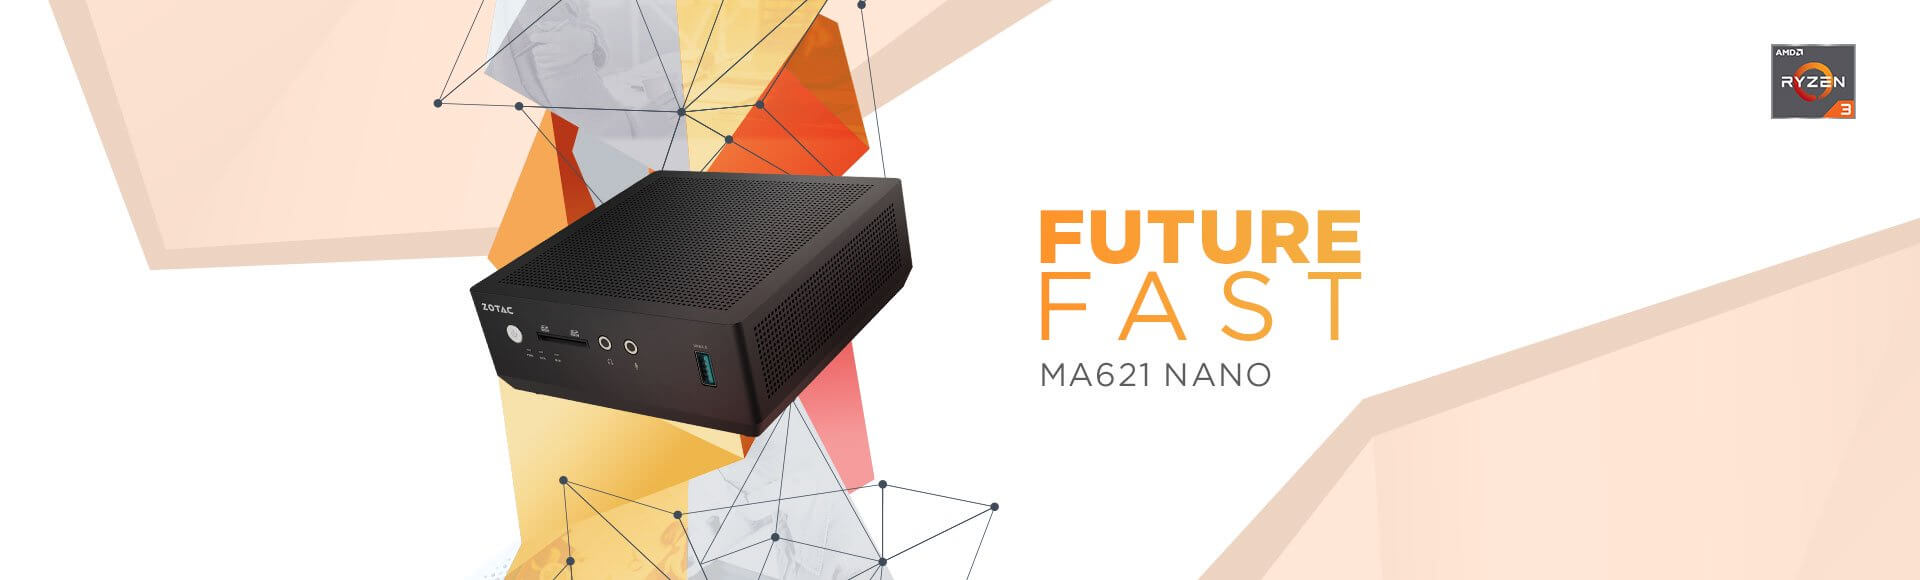 ZBOX Mシリーズ MA621 nano